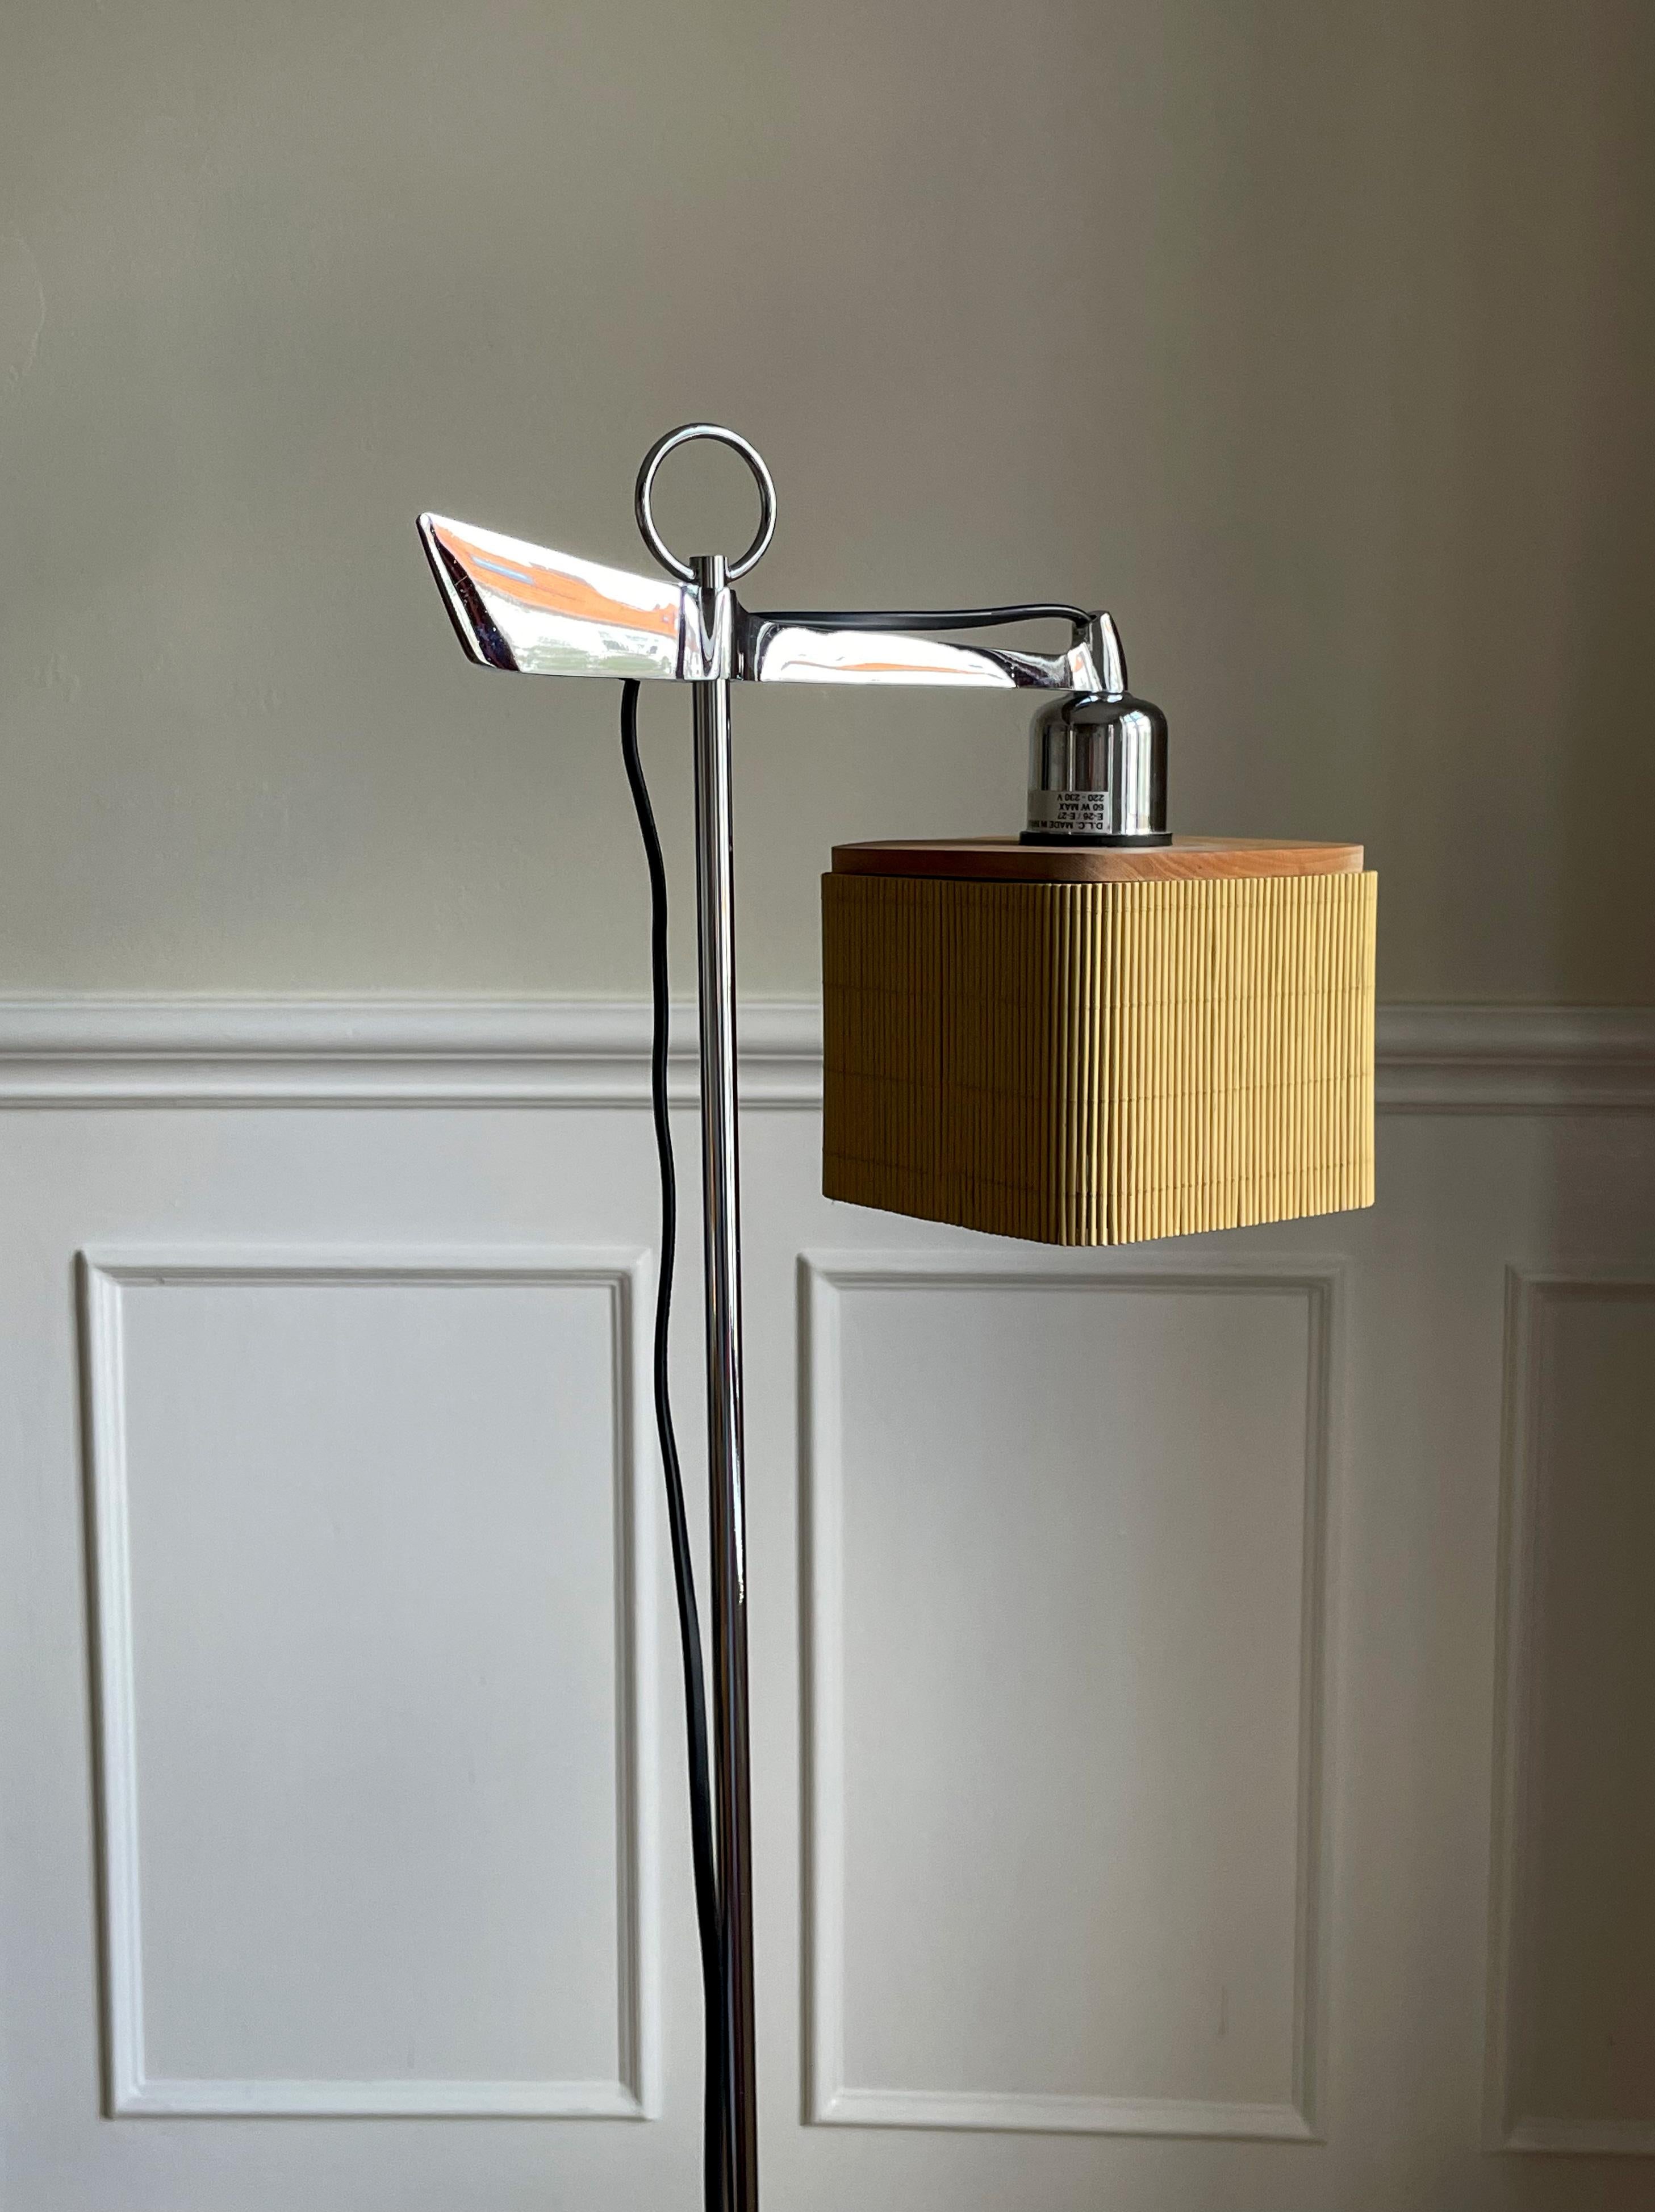 Adjustable Spanish Modernist Floor Lamp, Chrome, Wood, Rattan, 2010s In Good Condition For Sale In Copenhagen, DK